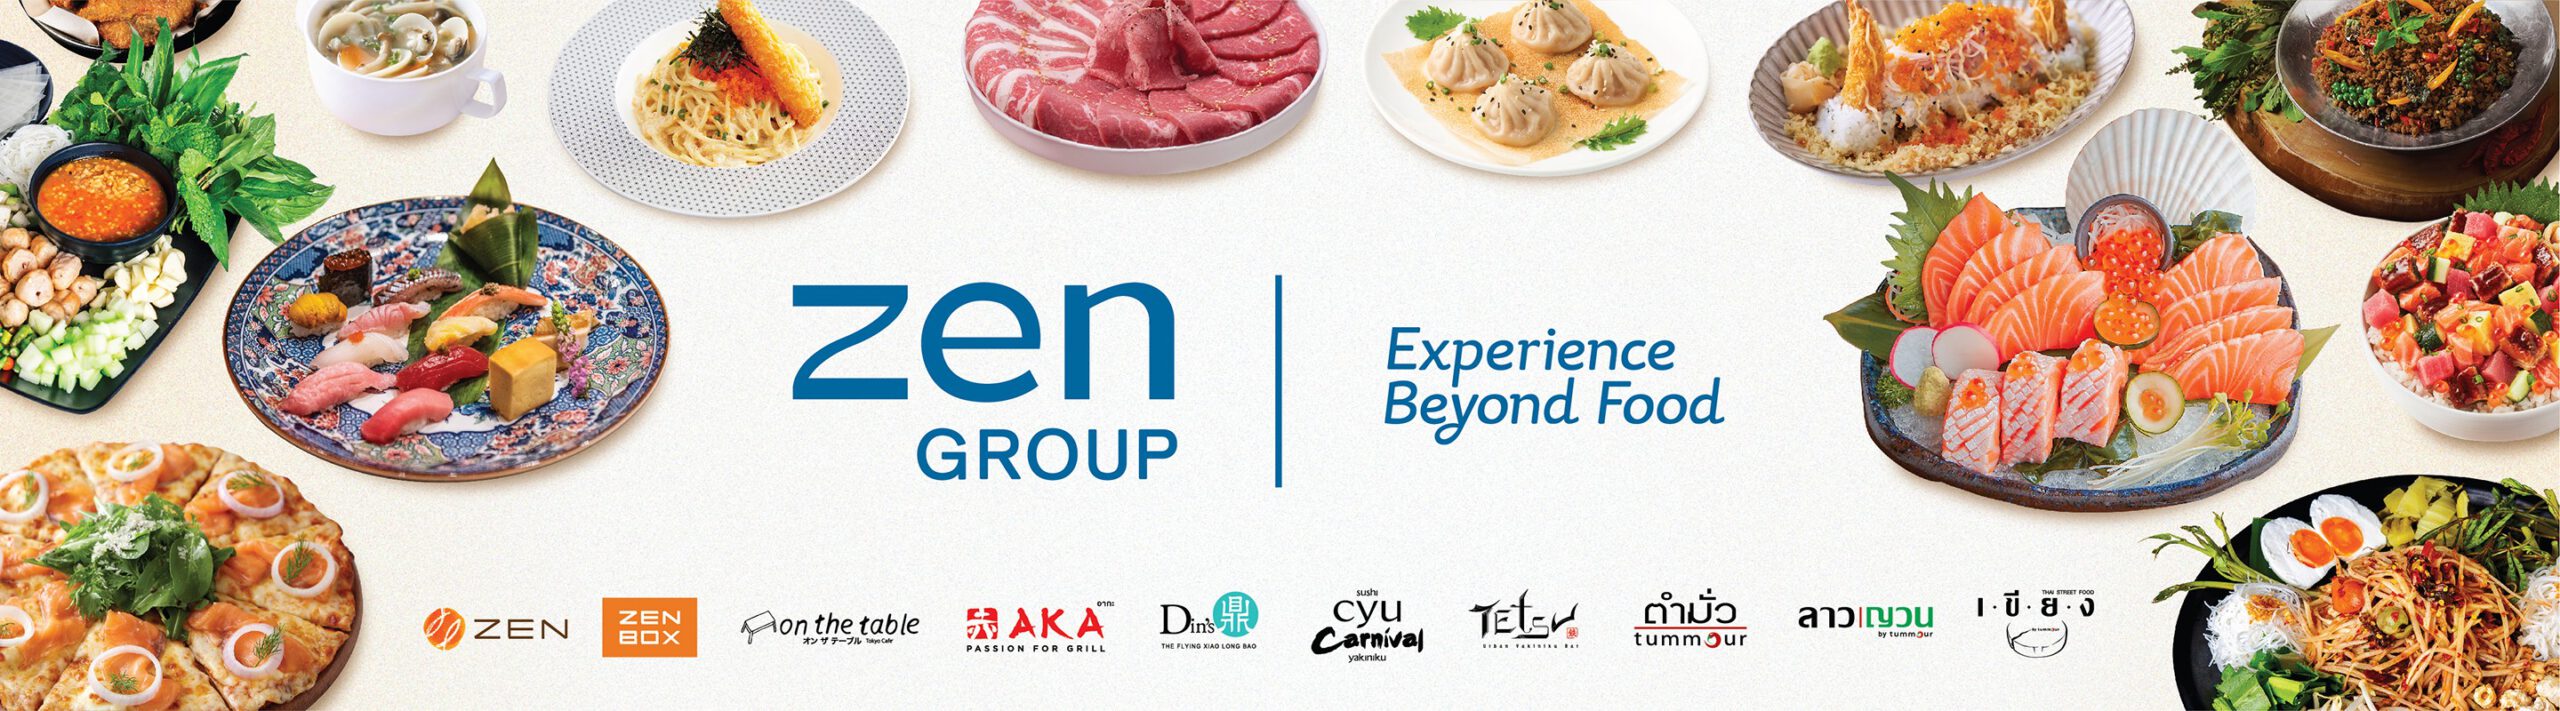 Zen Group Experience Beyond Food